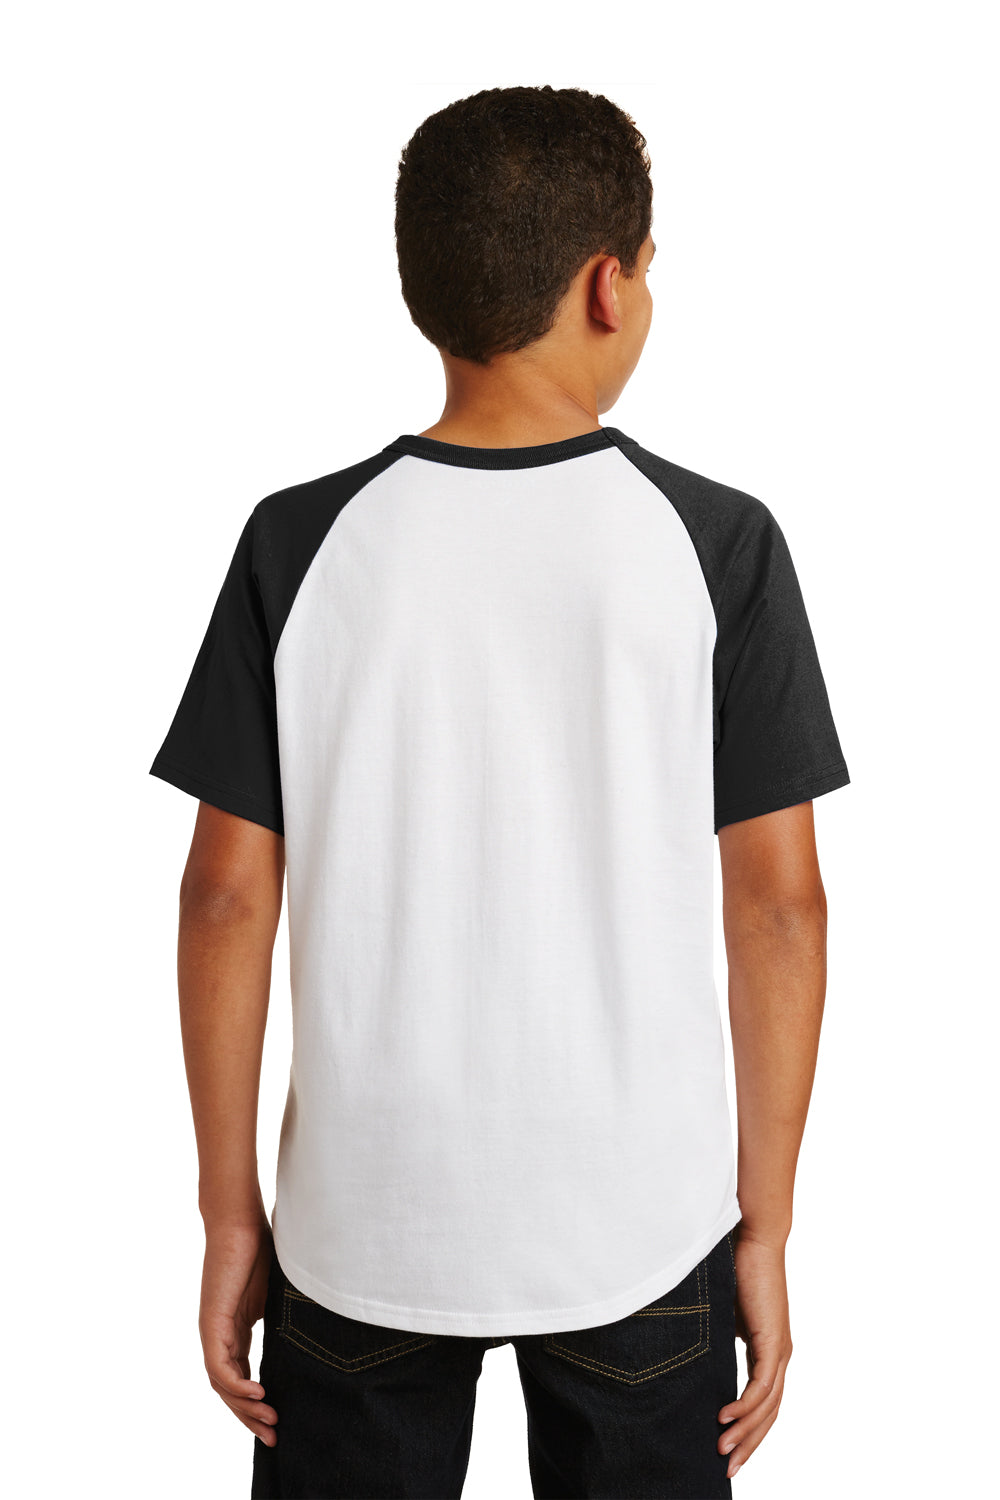 Sport-Tek YT201 Youth Short Sleeve Crewneck T-Shirt White/Black Back